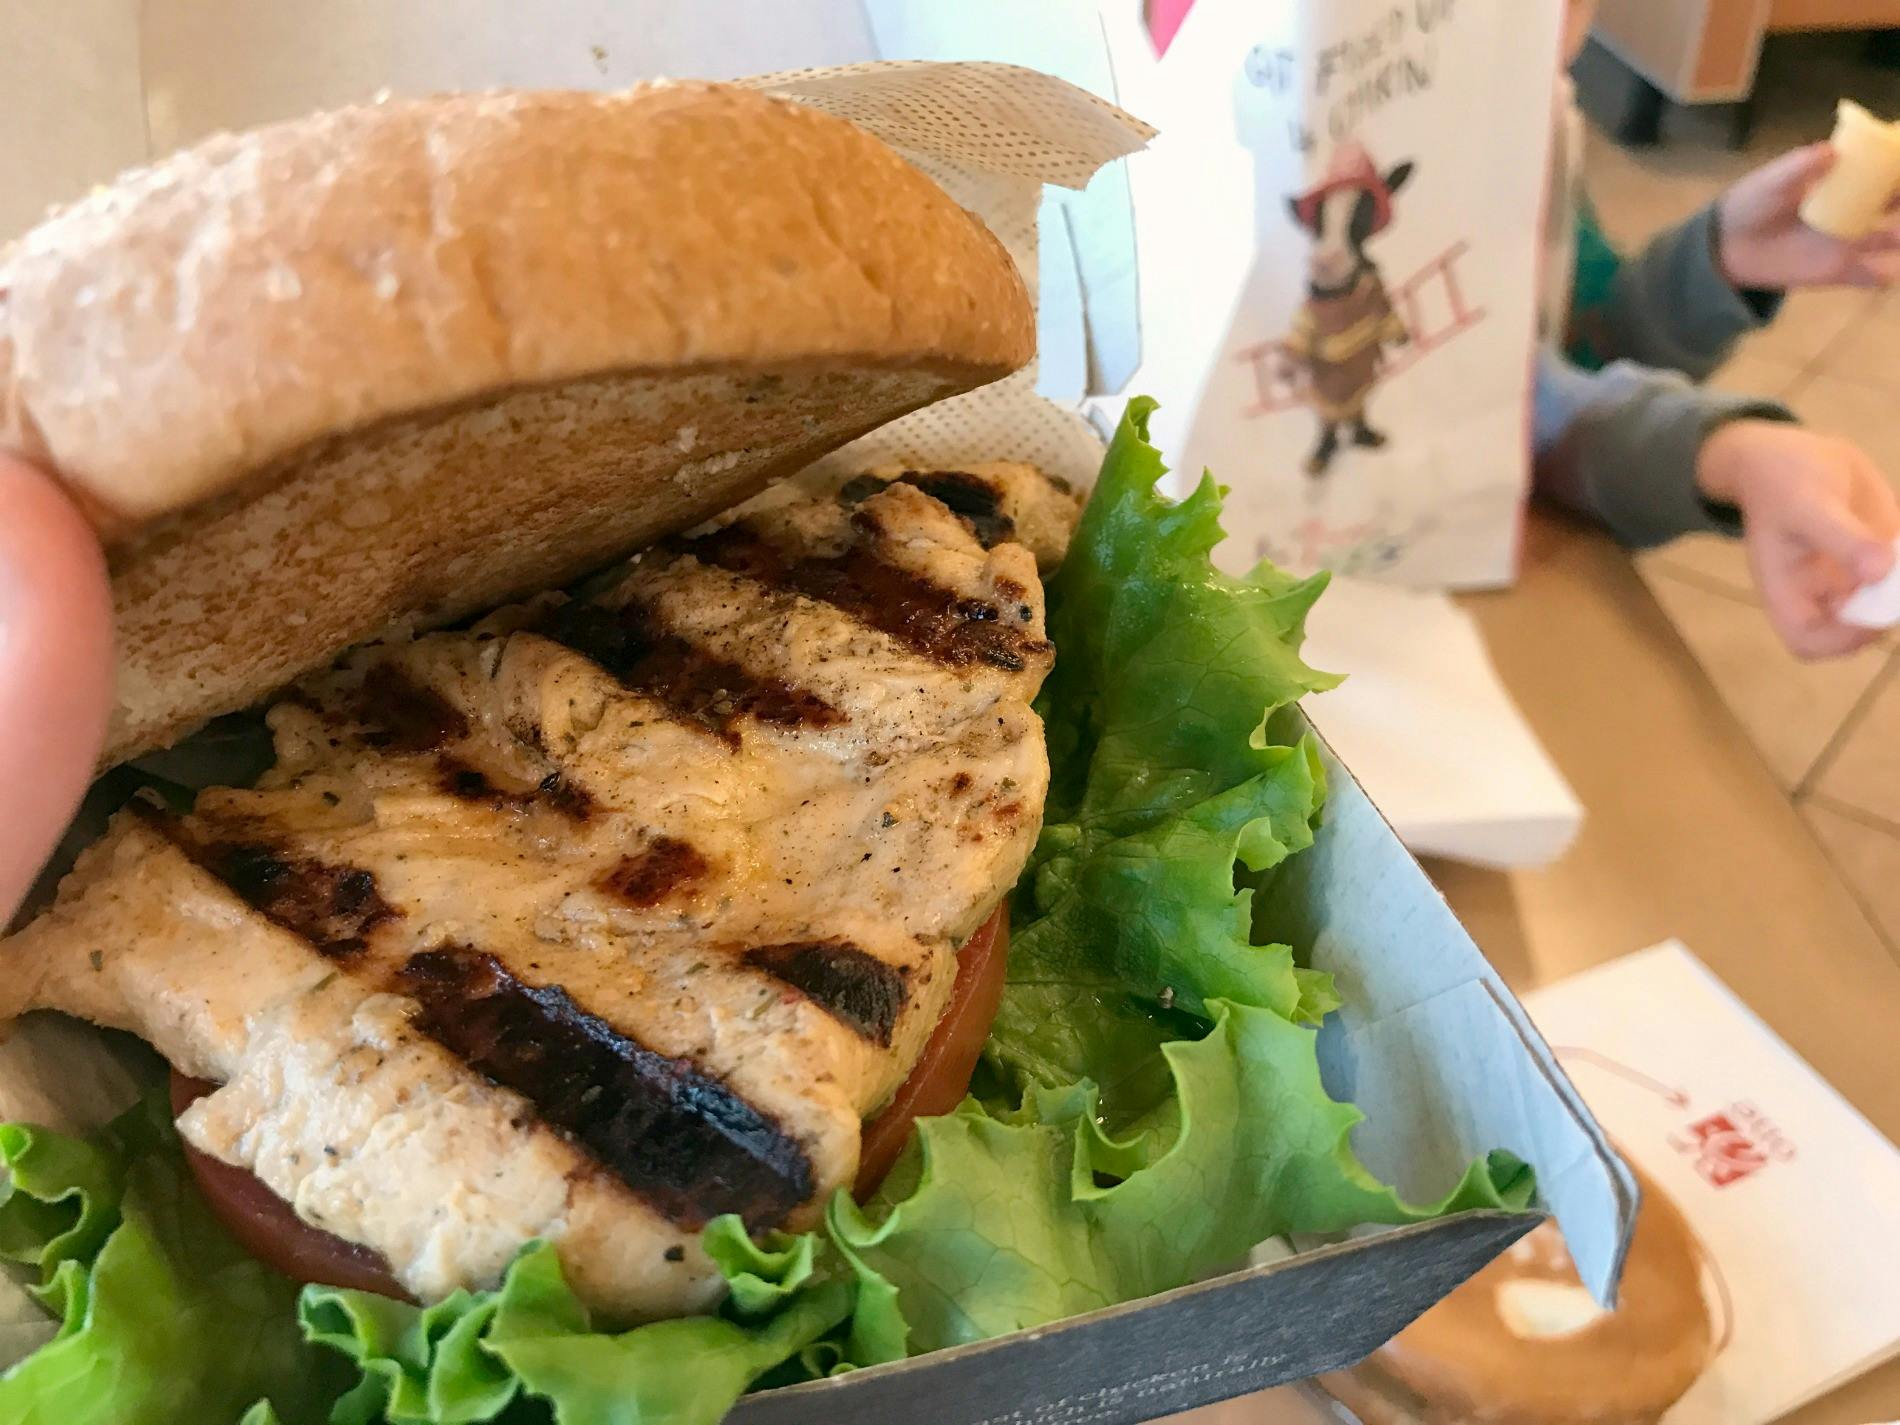 A close-up of a grilled chicken Chick-fil-A sandwich on a gluten free bun.